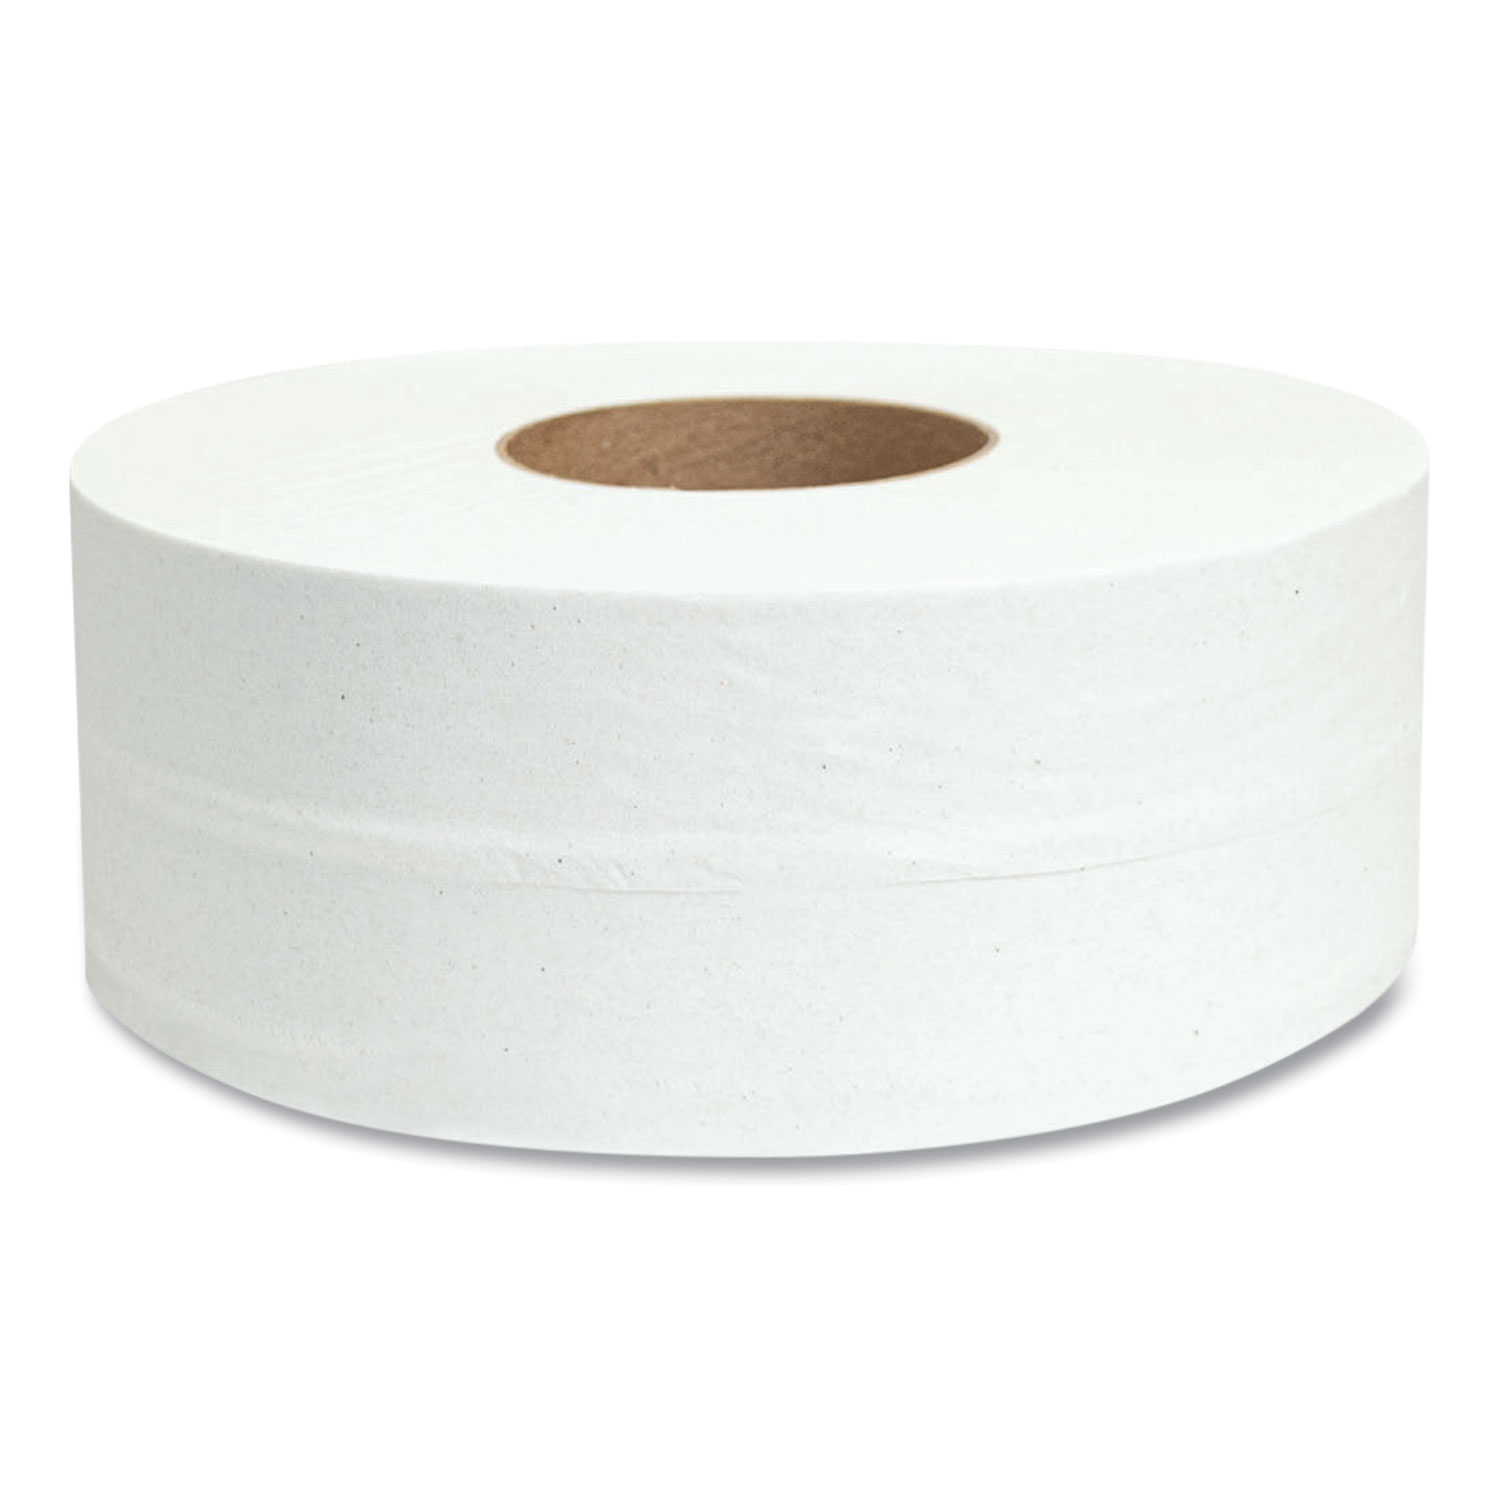 Morcon Tissue Jumbo Bath Tissue, Septic Safe, 2-Ply, White, 1000 ft, 12 ...